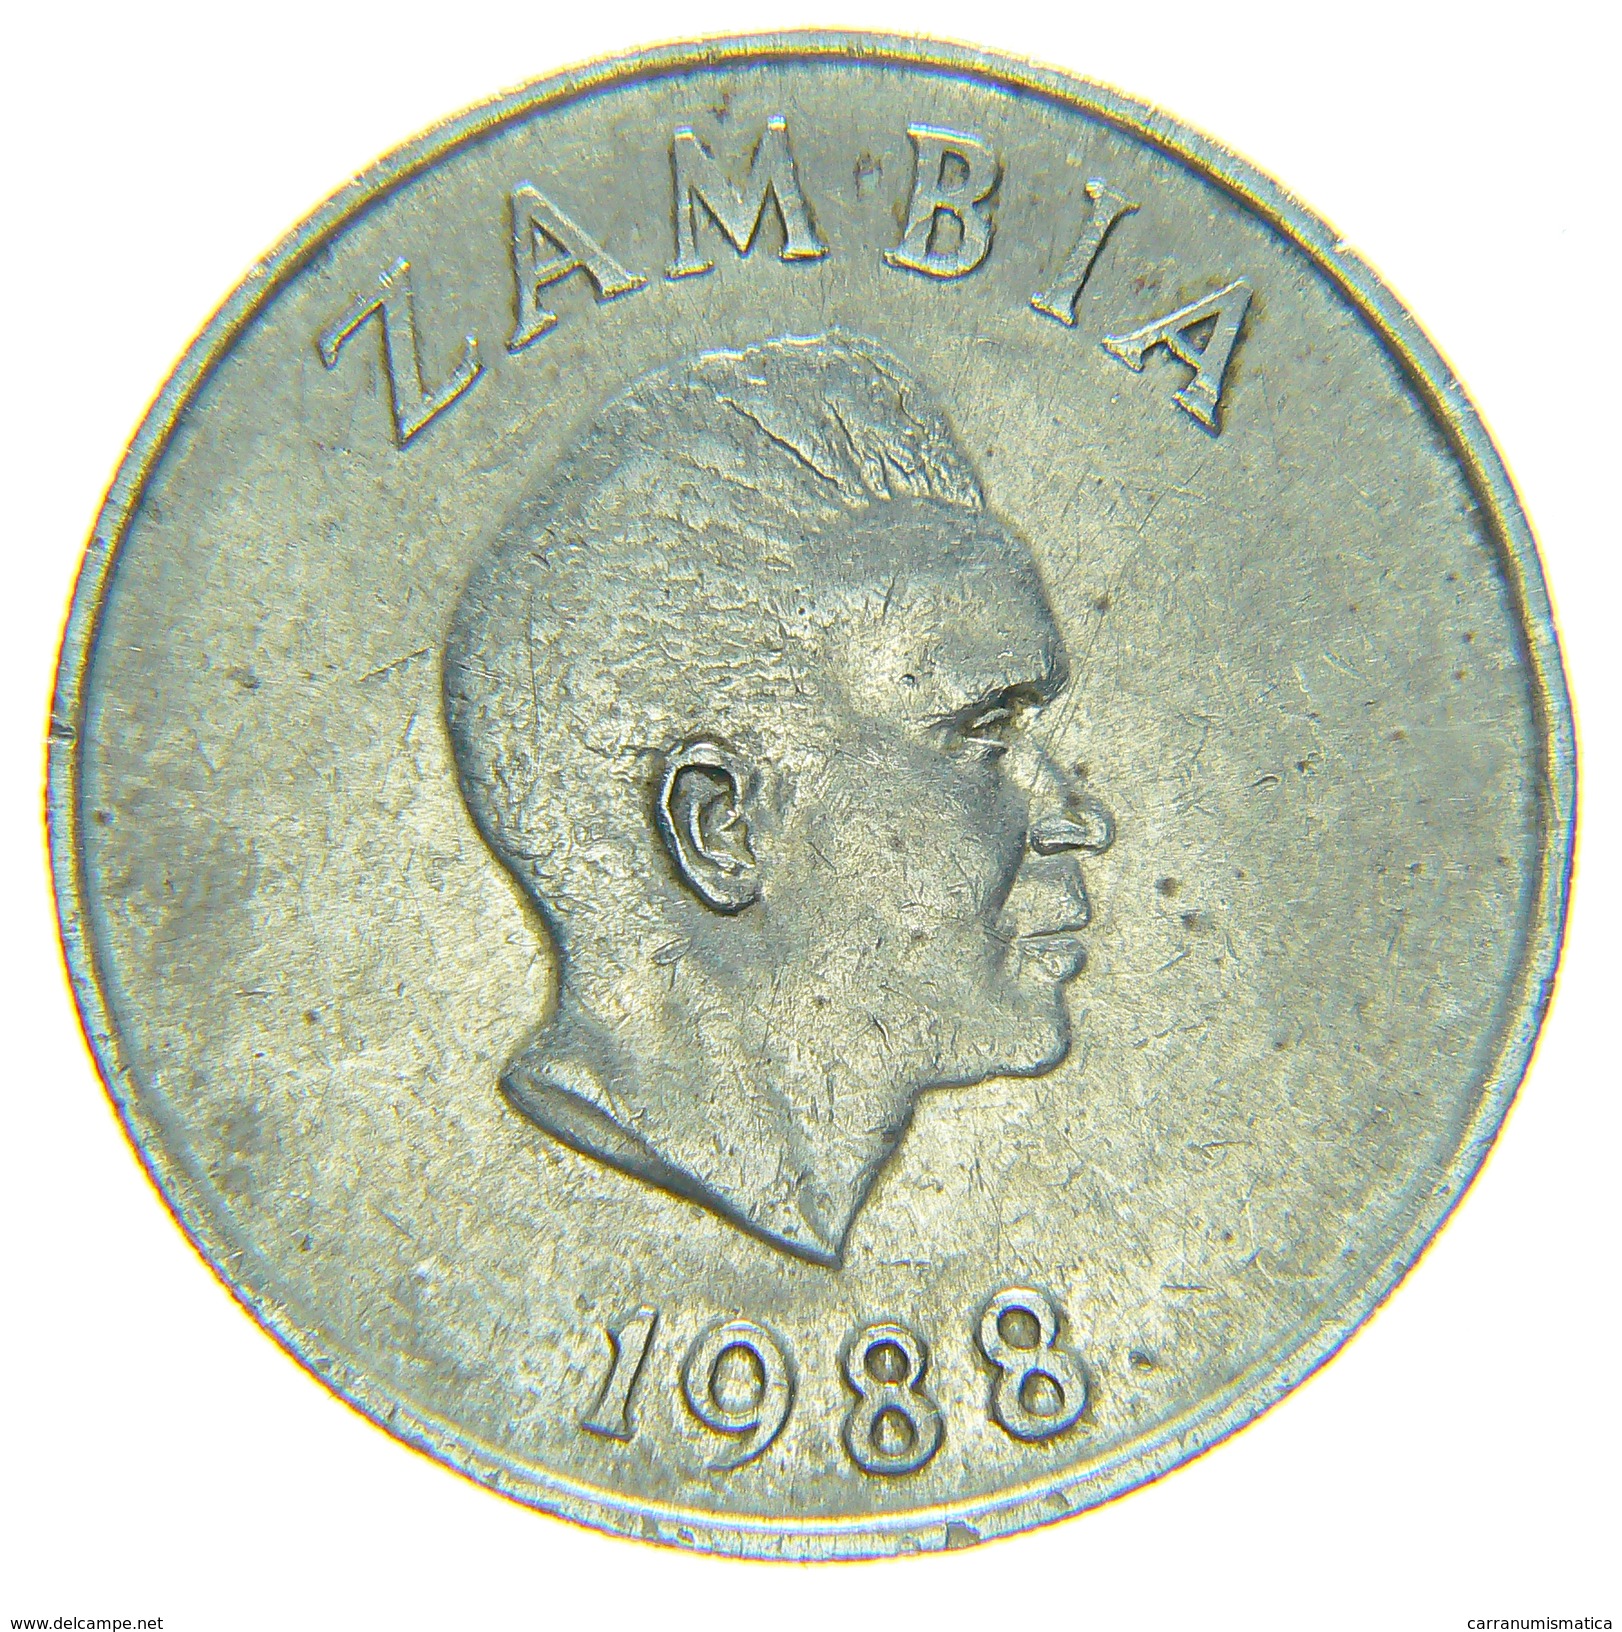 [NC] ZAMBIA - 20 NGWEE 1988 - Sambia